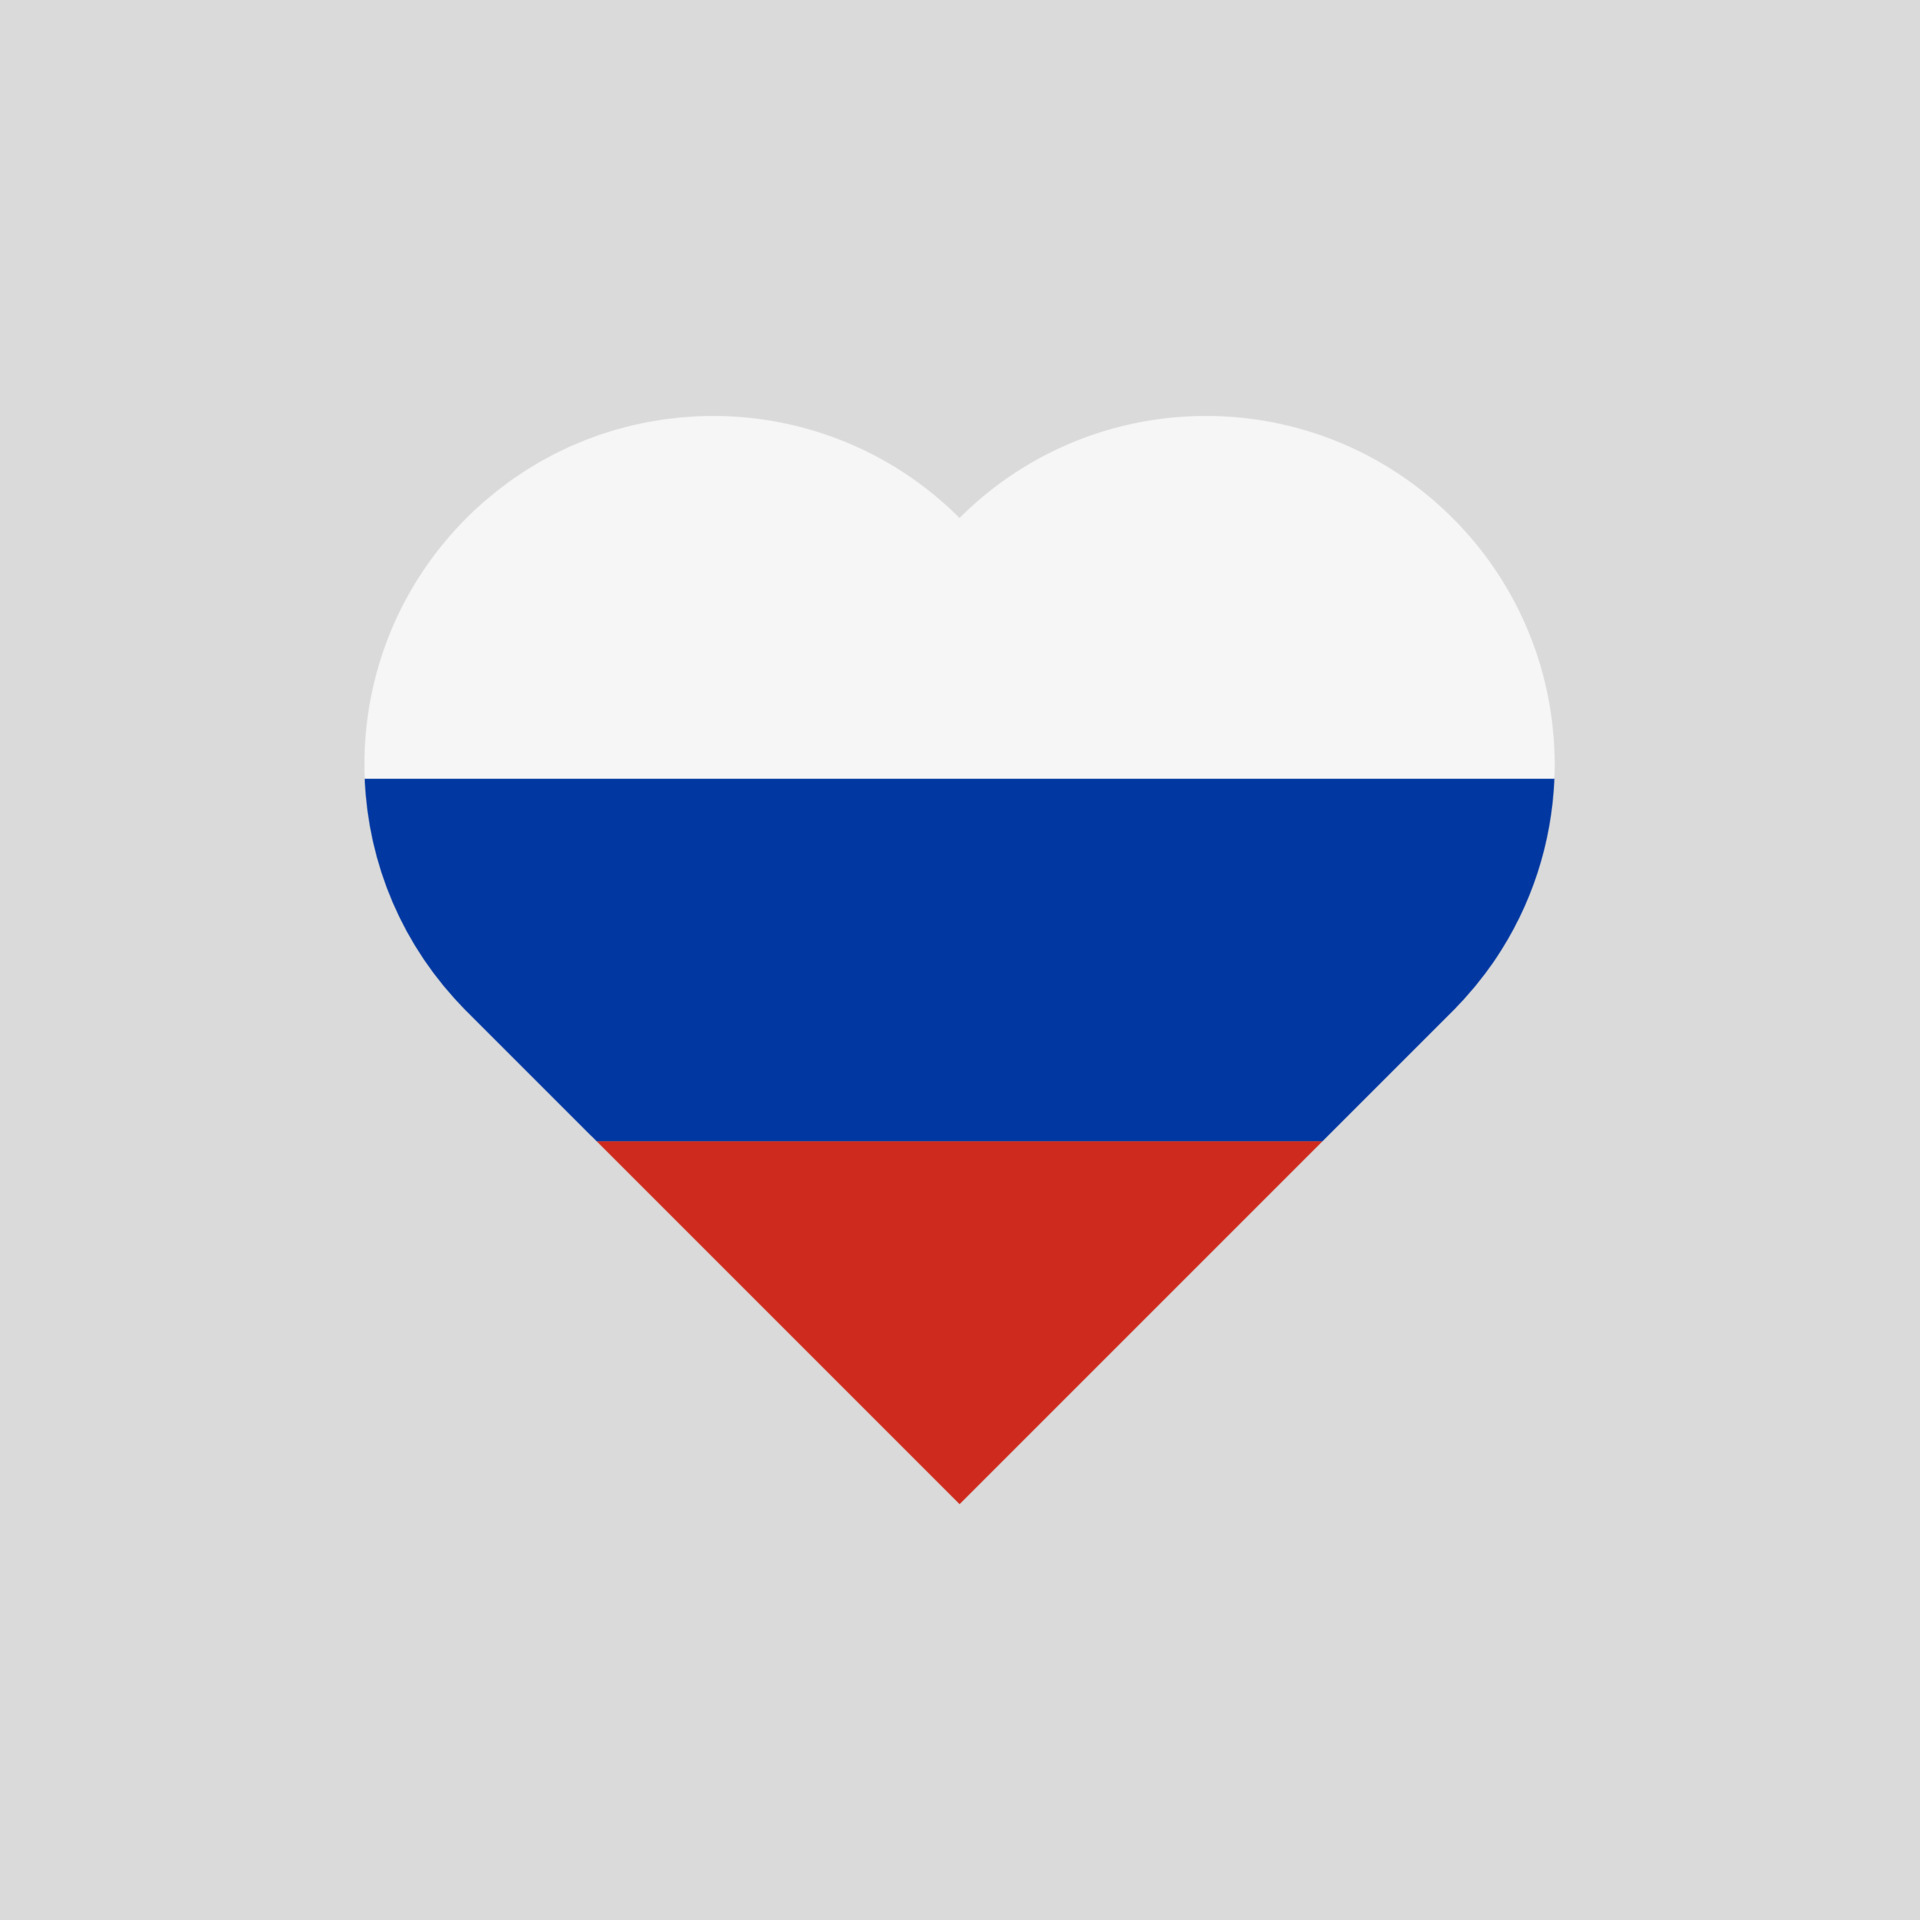 Russland Flagge - Download kostenlose symbole